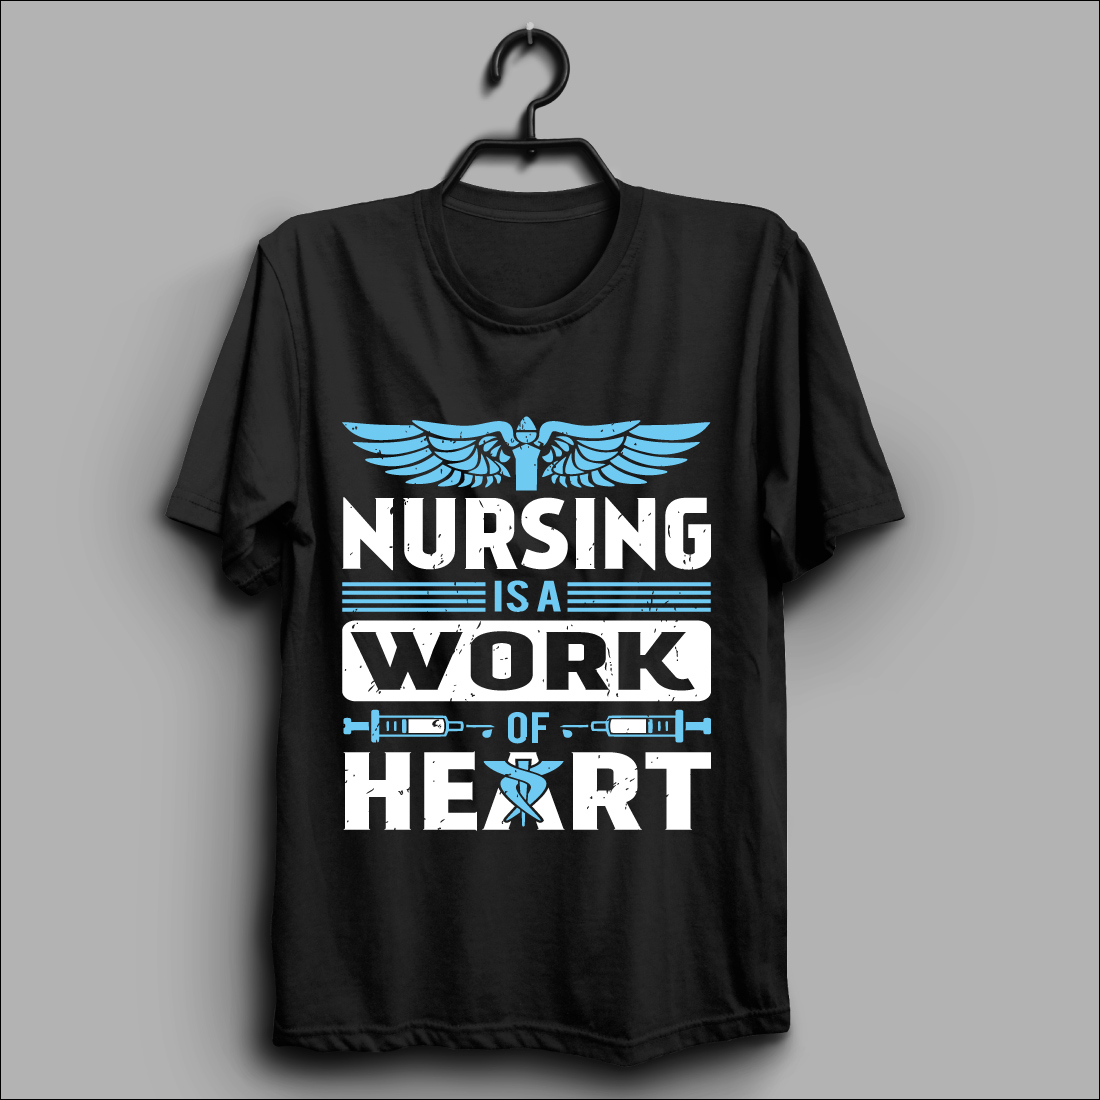 nurse t shirt design4 503